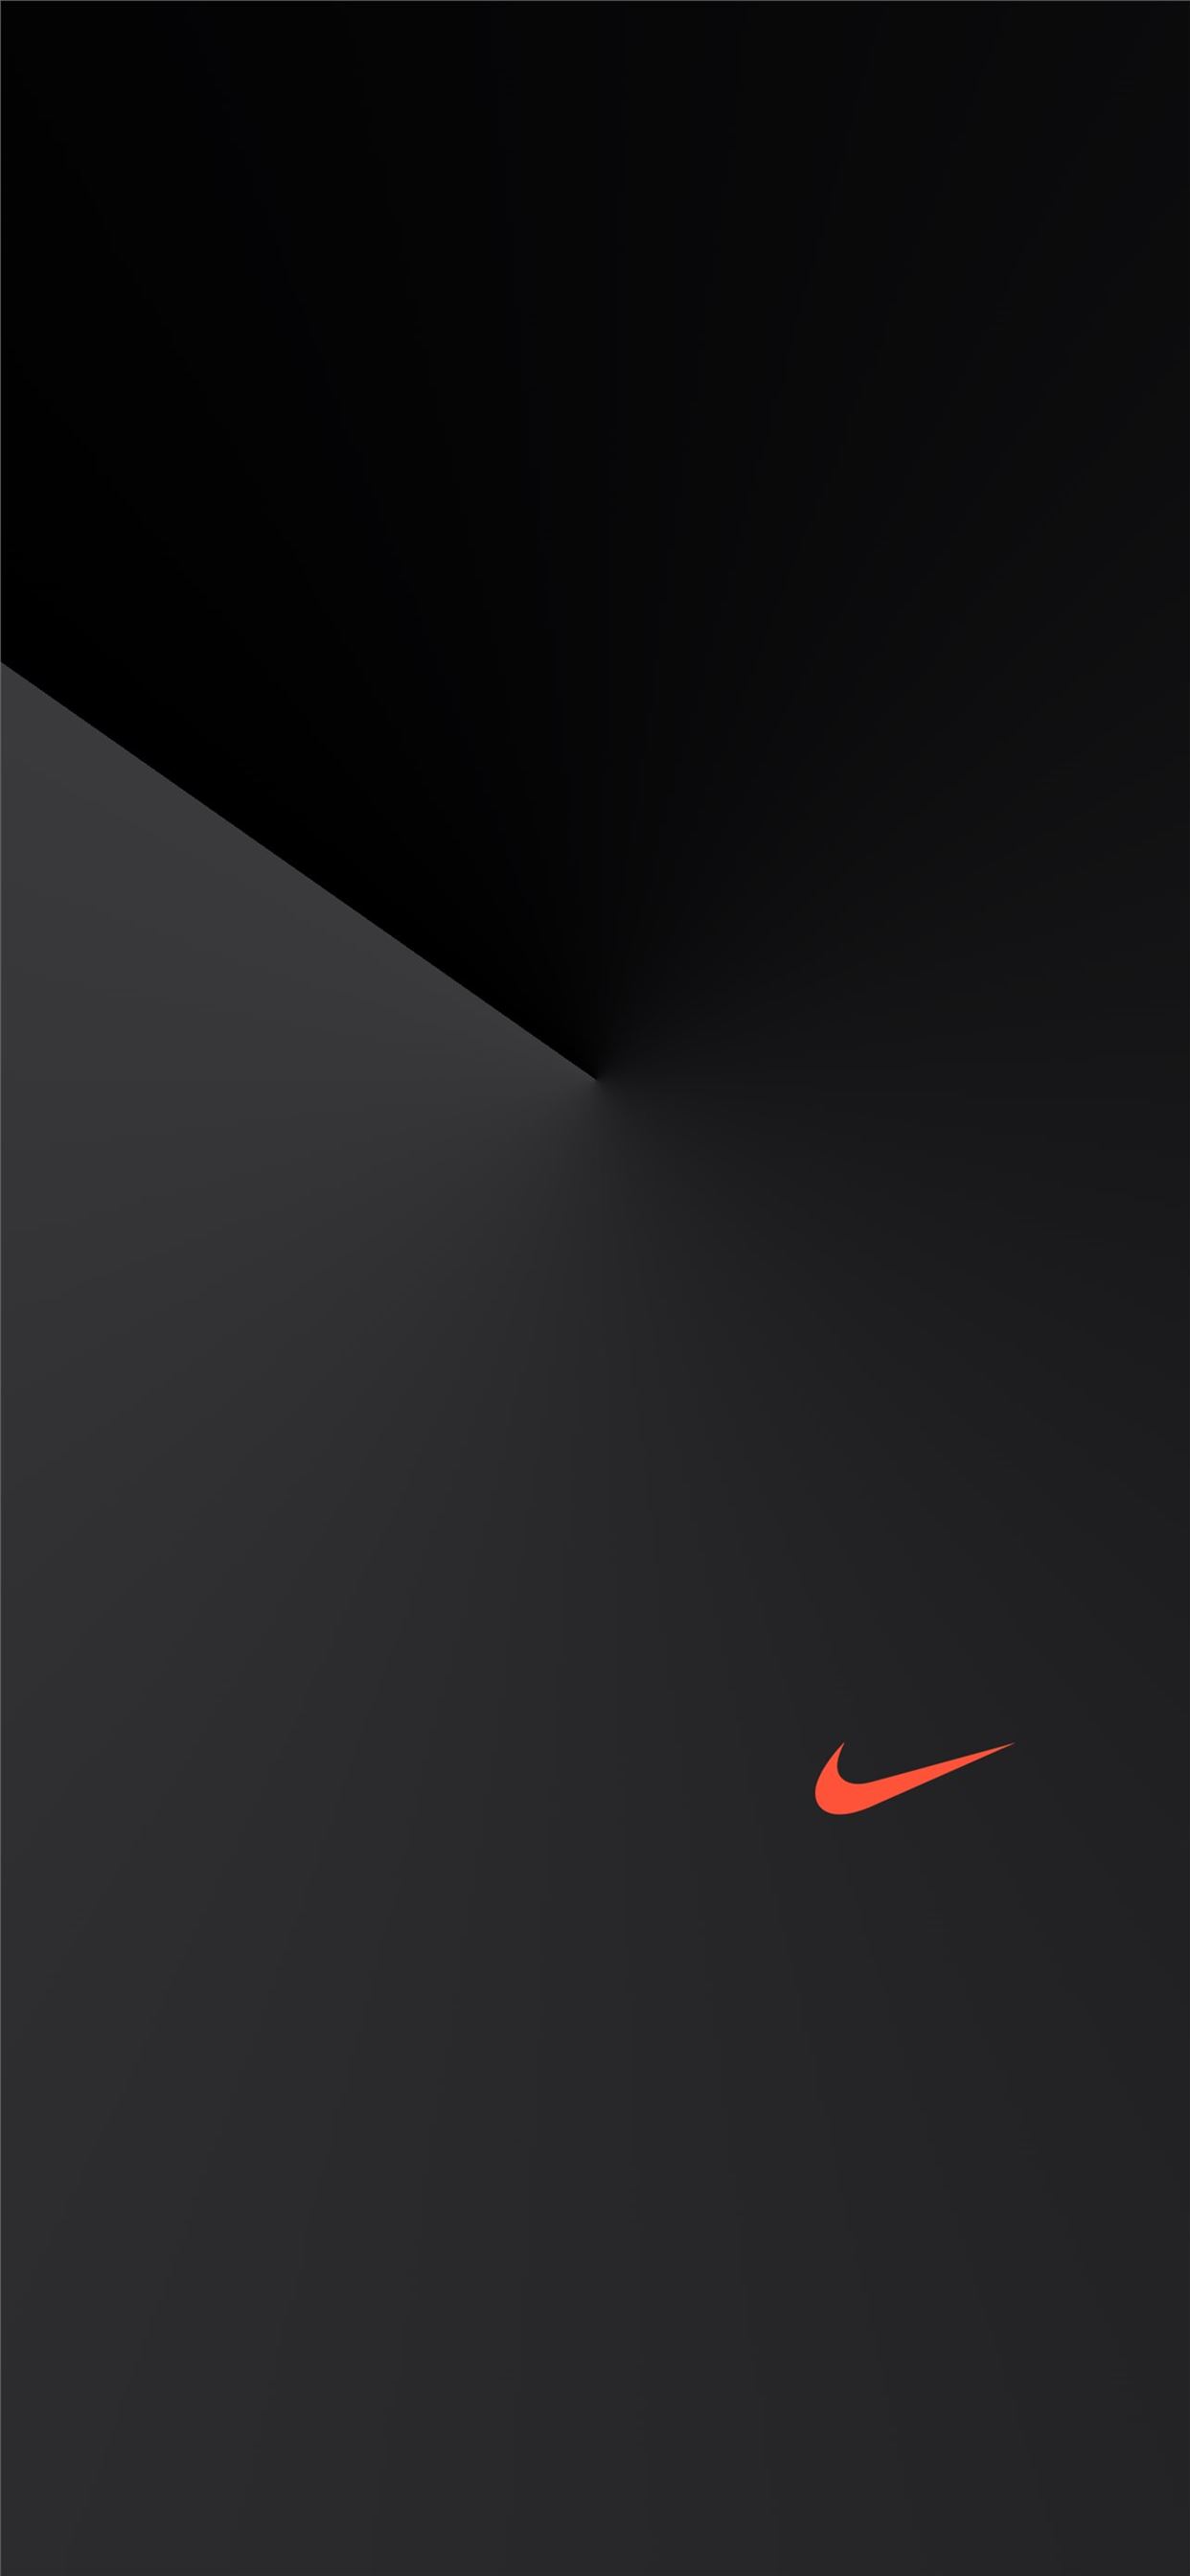 Nike Dark Wallpapers Free Download